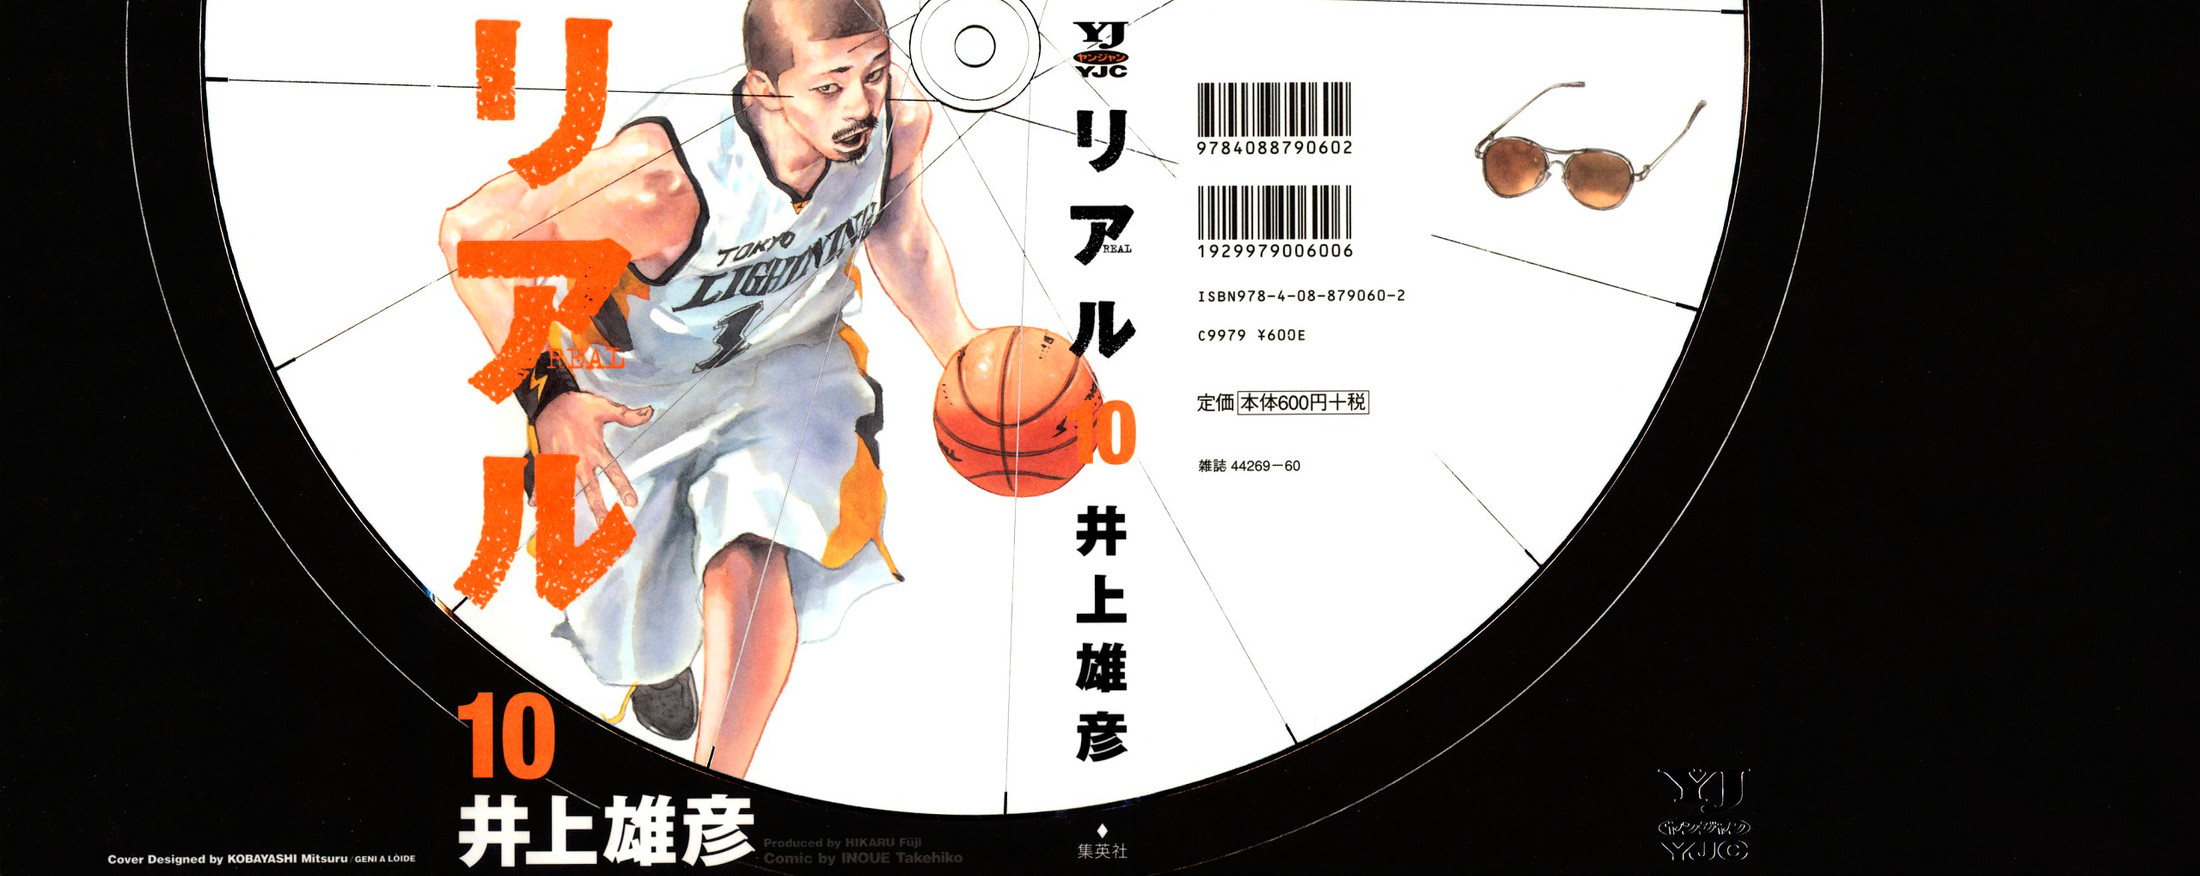 Эта игра слишком реальна манга 32. Такэхико Иноэ. Такэхико Иноуэ баскетбол. Real Manga. Real Manga Cover.